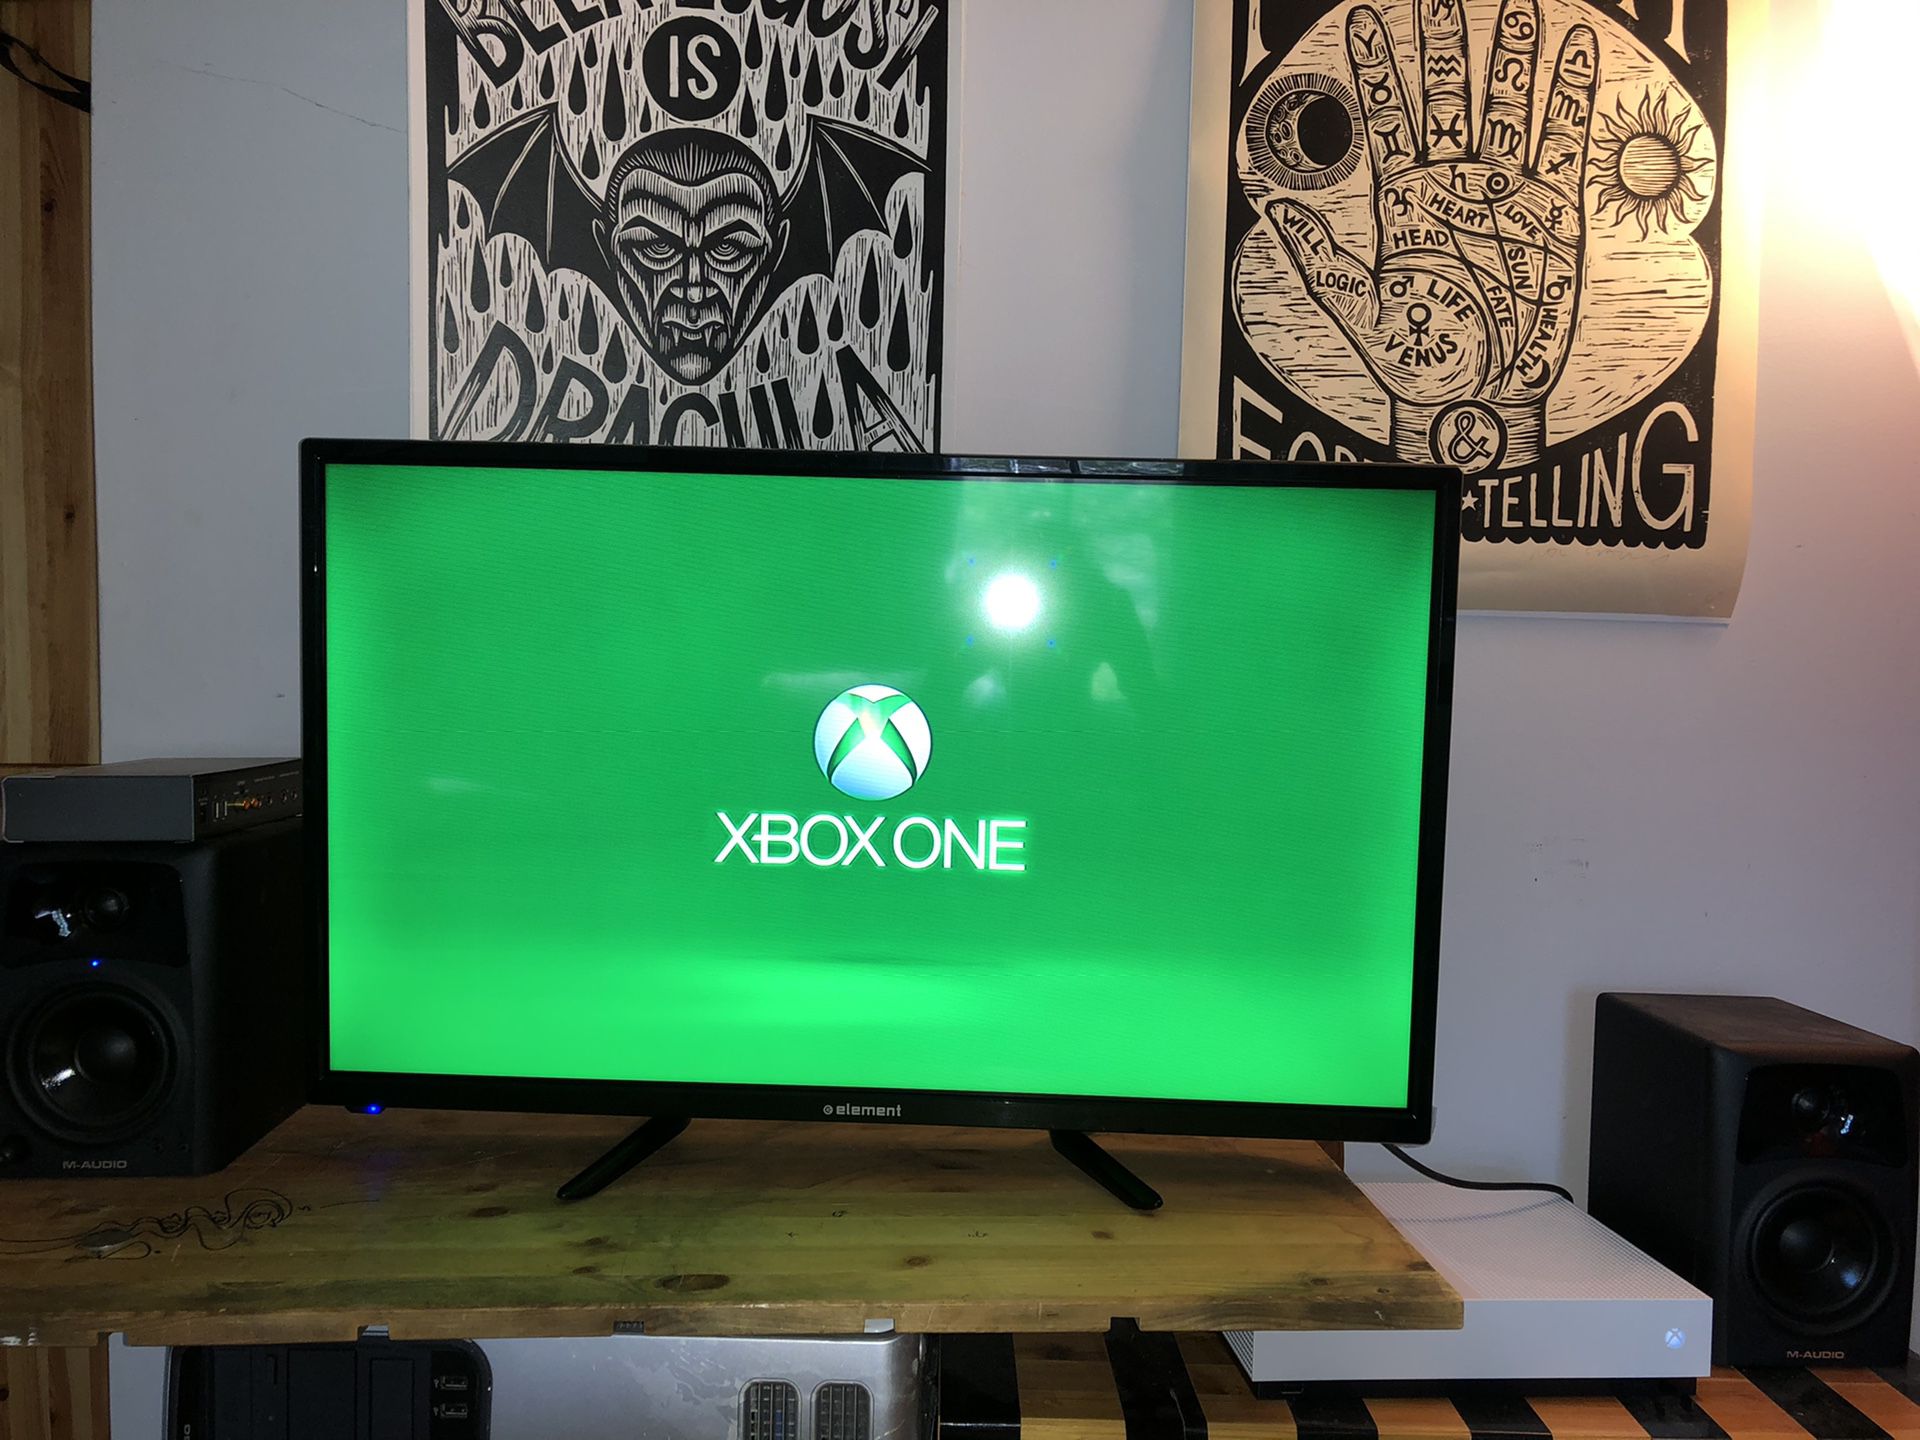 Xbox One 1TB , Element 32’’ Flatscreen TV, M-Audio Dual Speakers